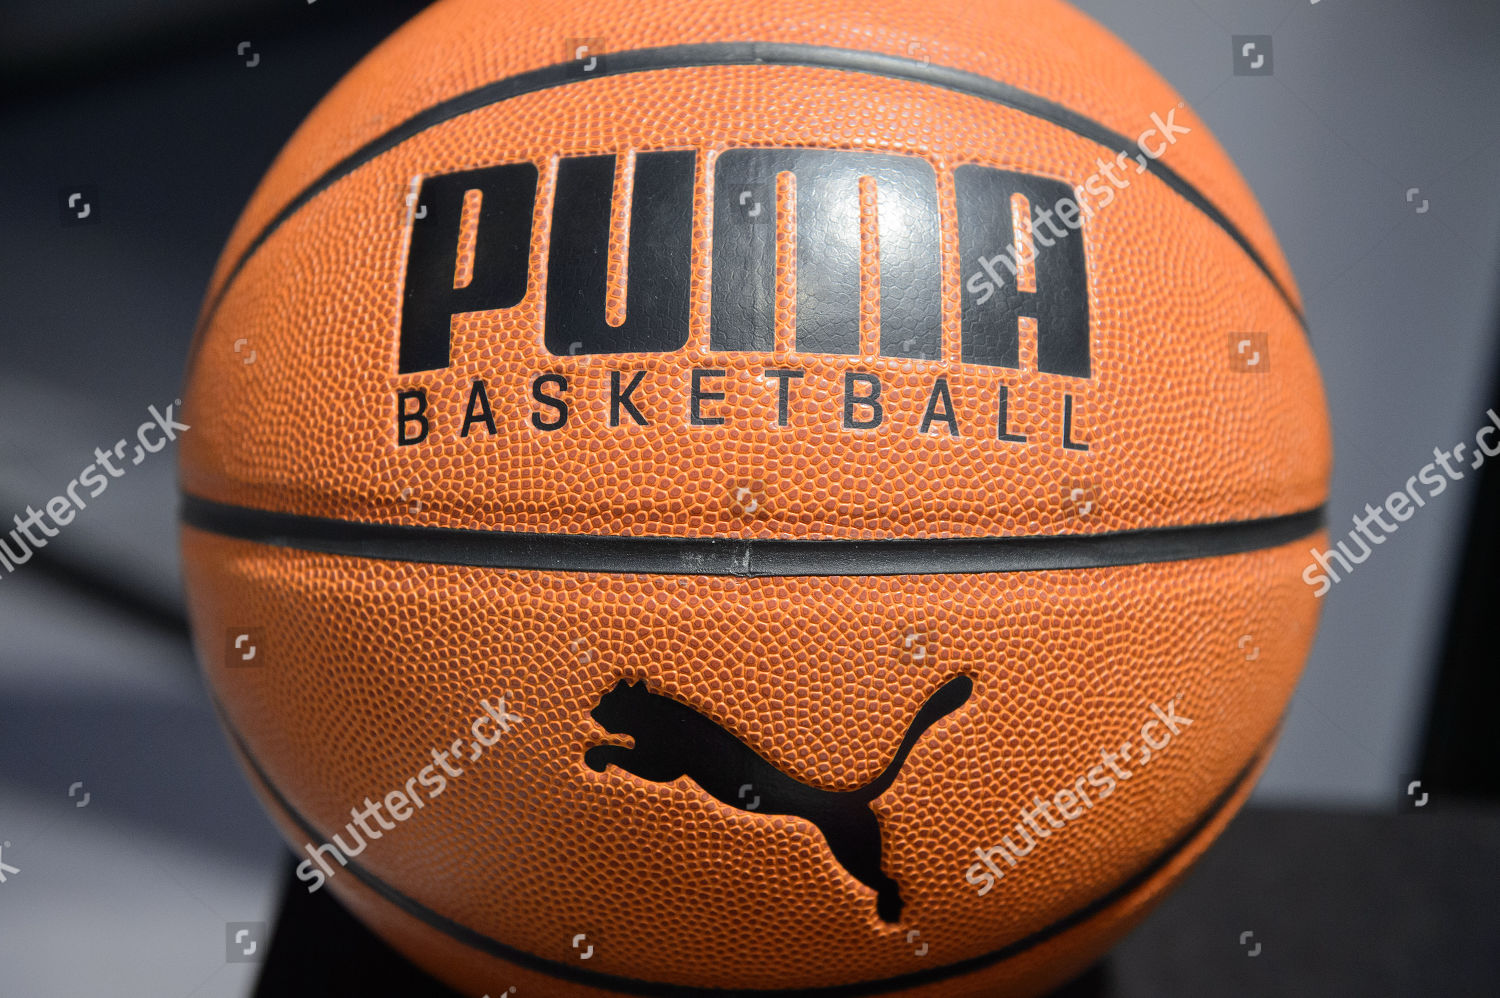 Puma basketball ball companys logo 